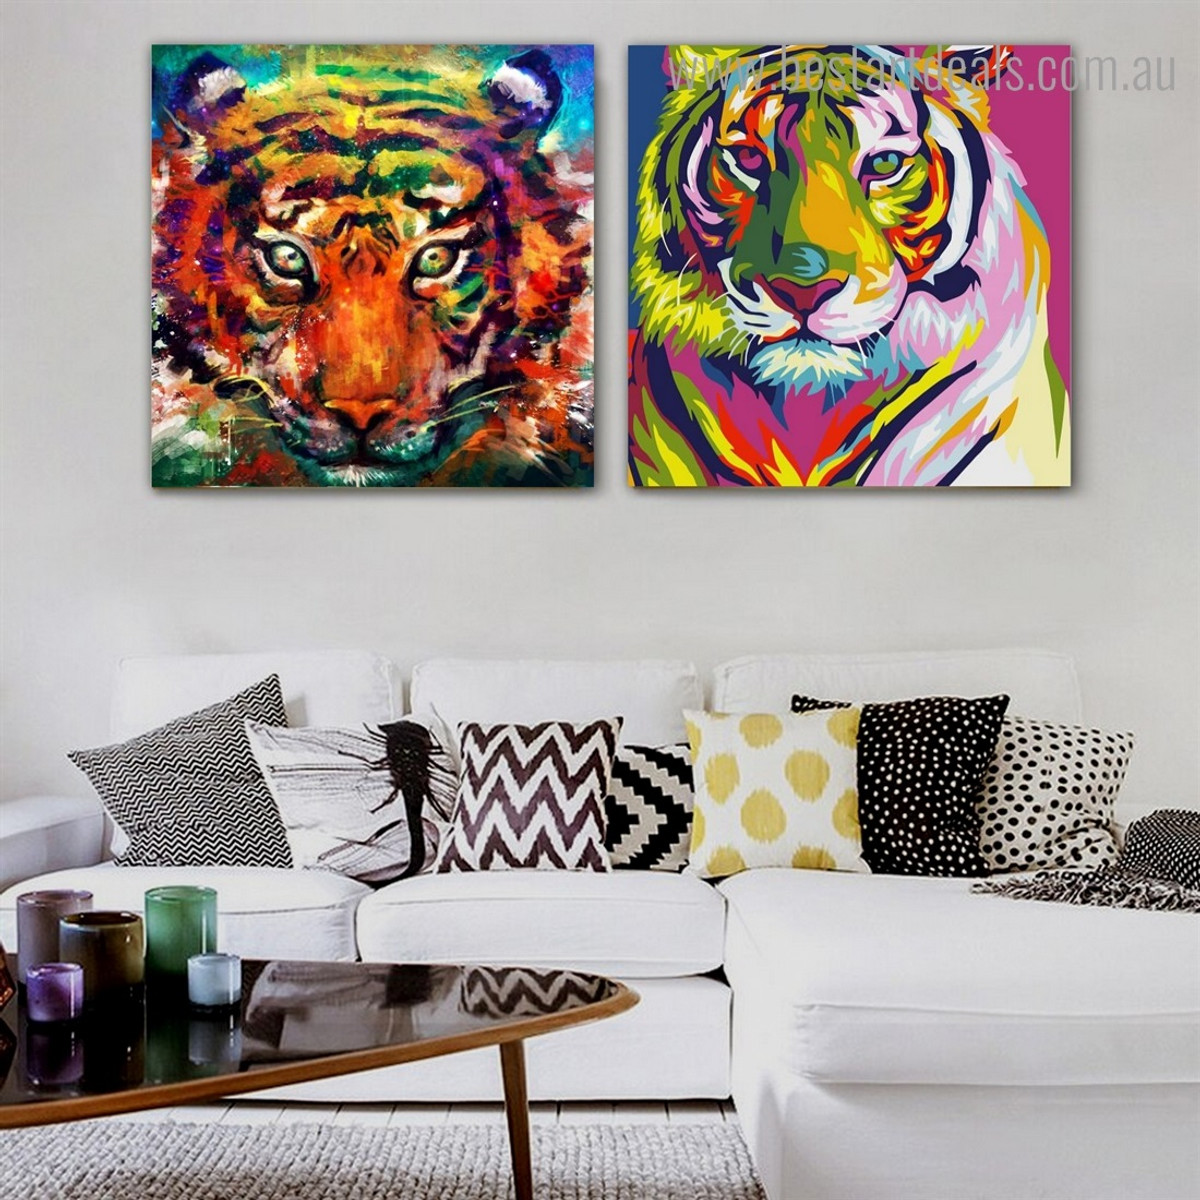 Buy Colorific Tigers Canvas Print Wall Art Decor.